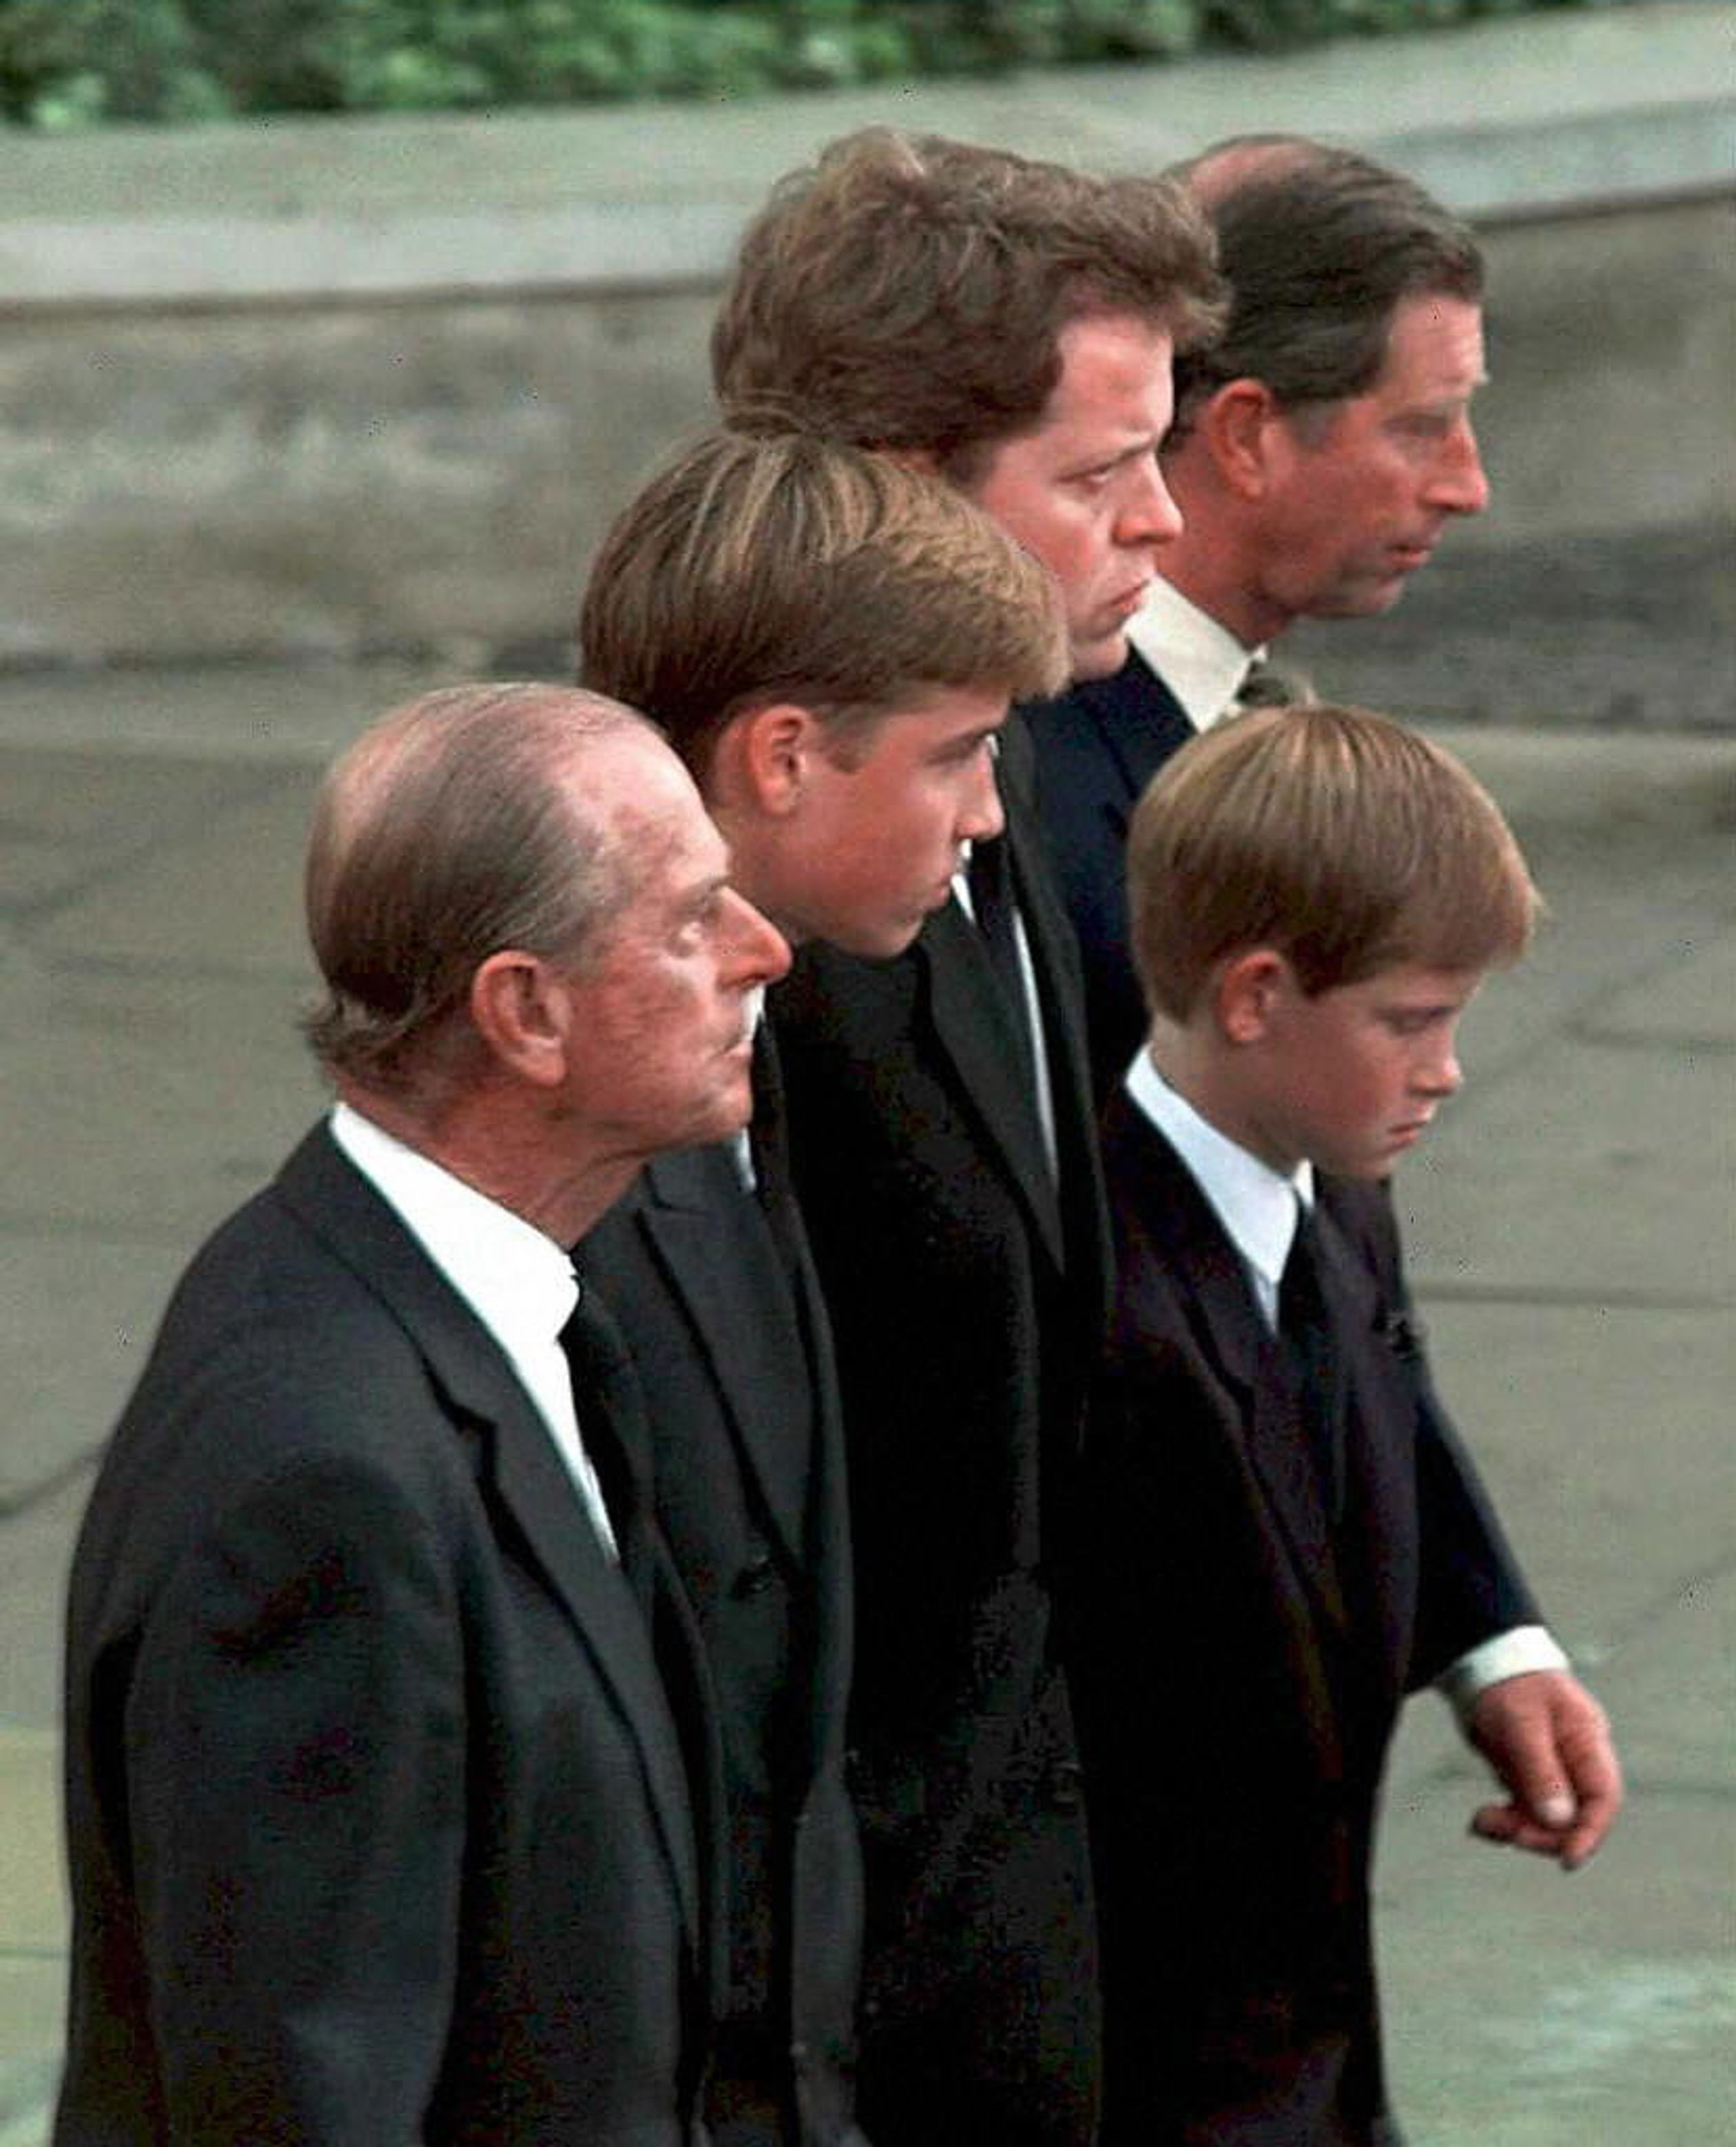 Tijdens de begrafenis van prinses Diana liep Philip mee achter de kist. Naast hem prins William, de broer van Diana Charles Spencer,  prins Harry en prins Charles.